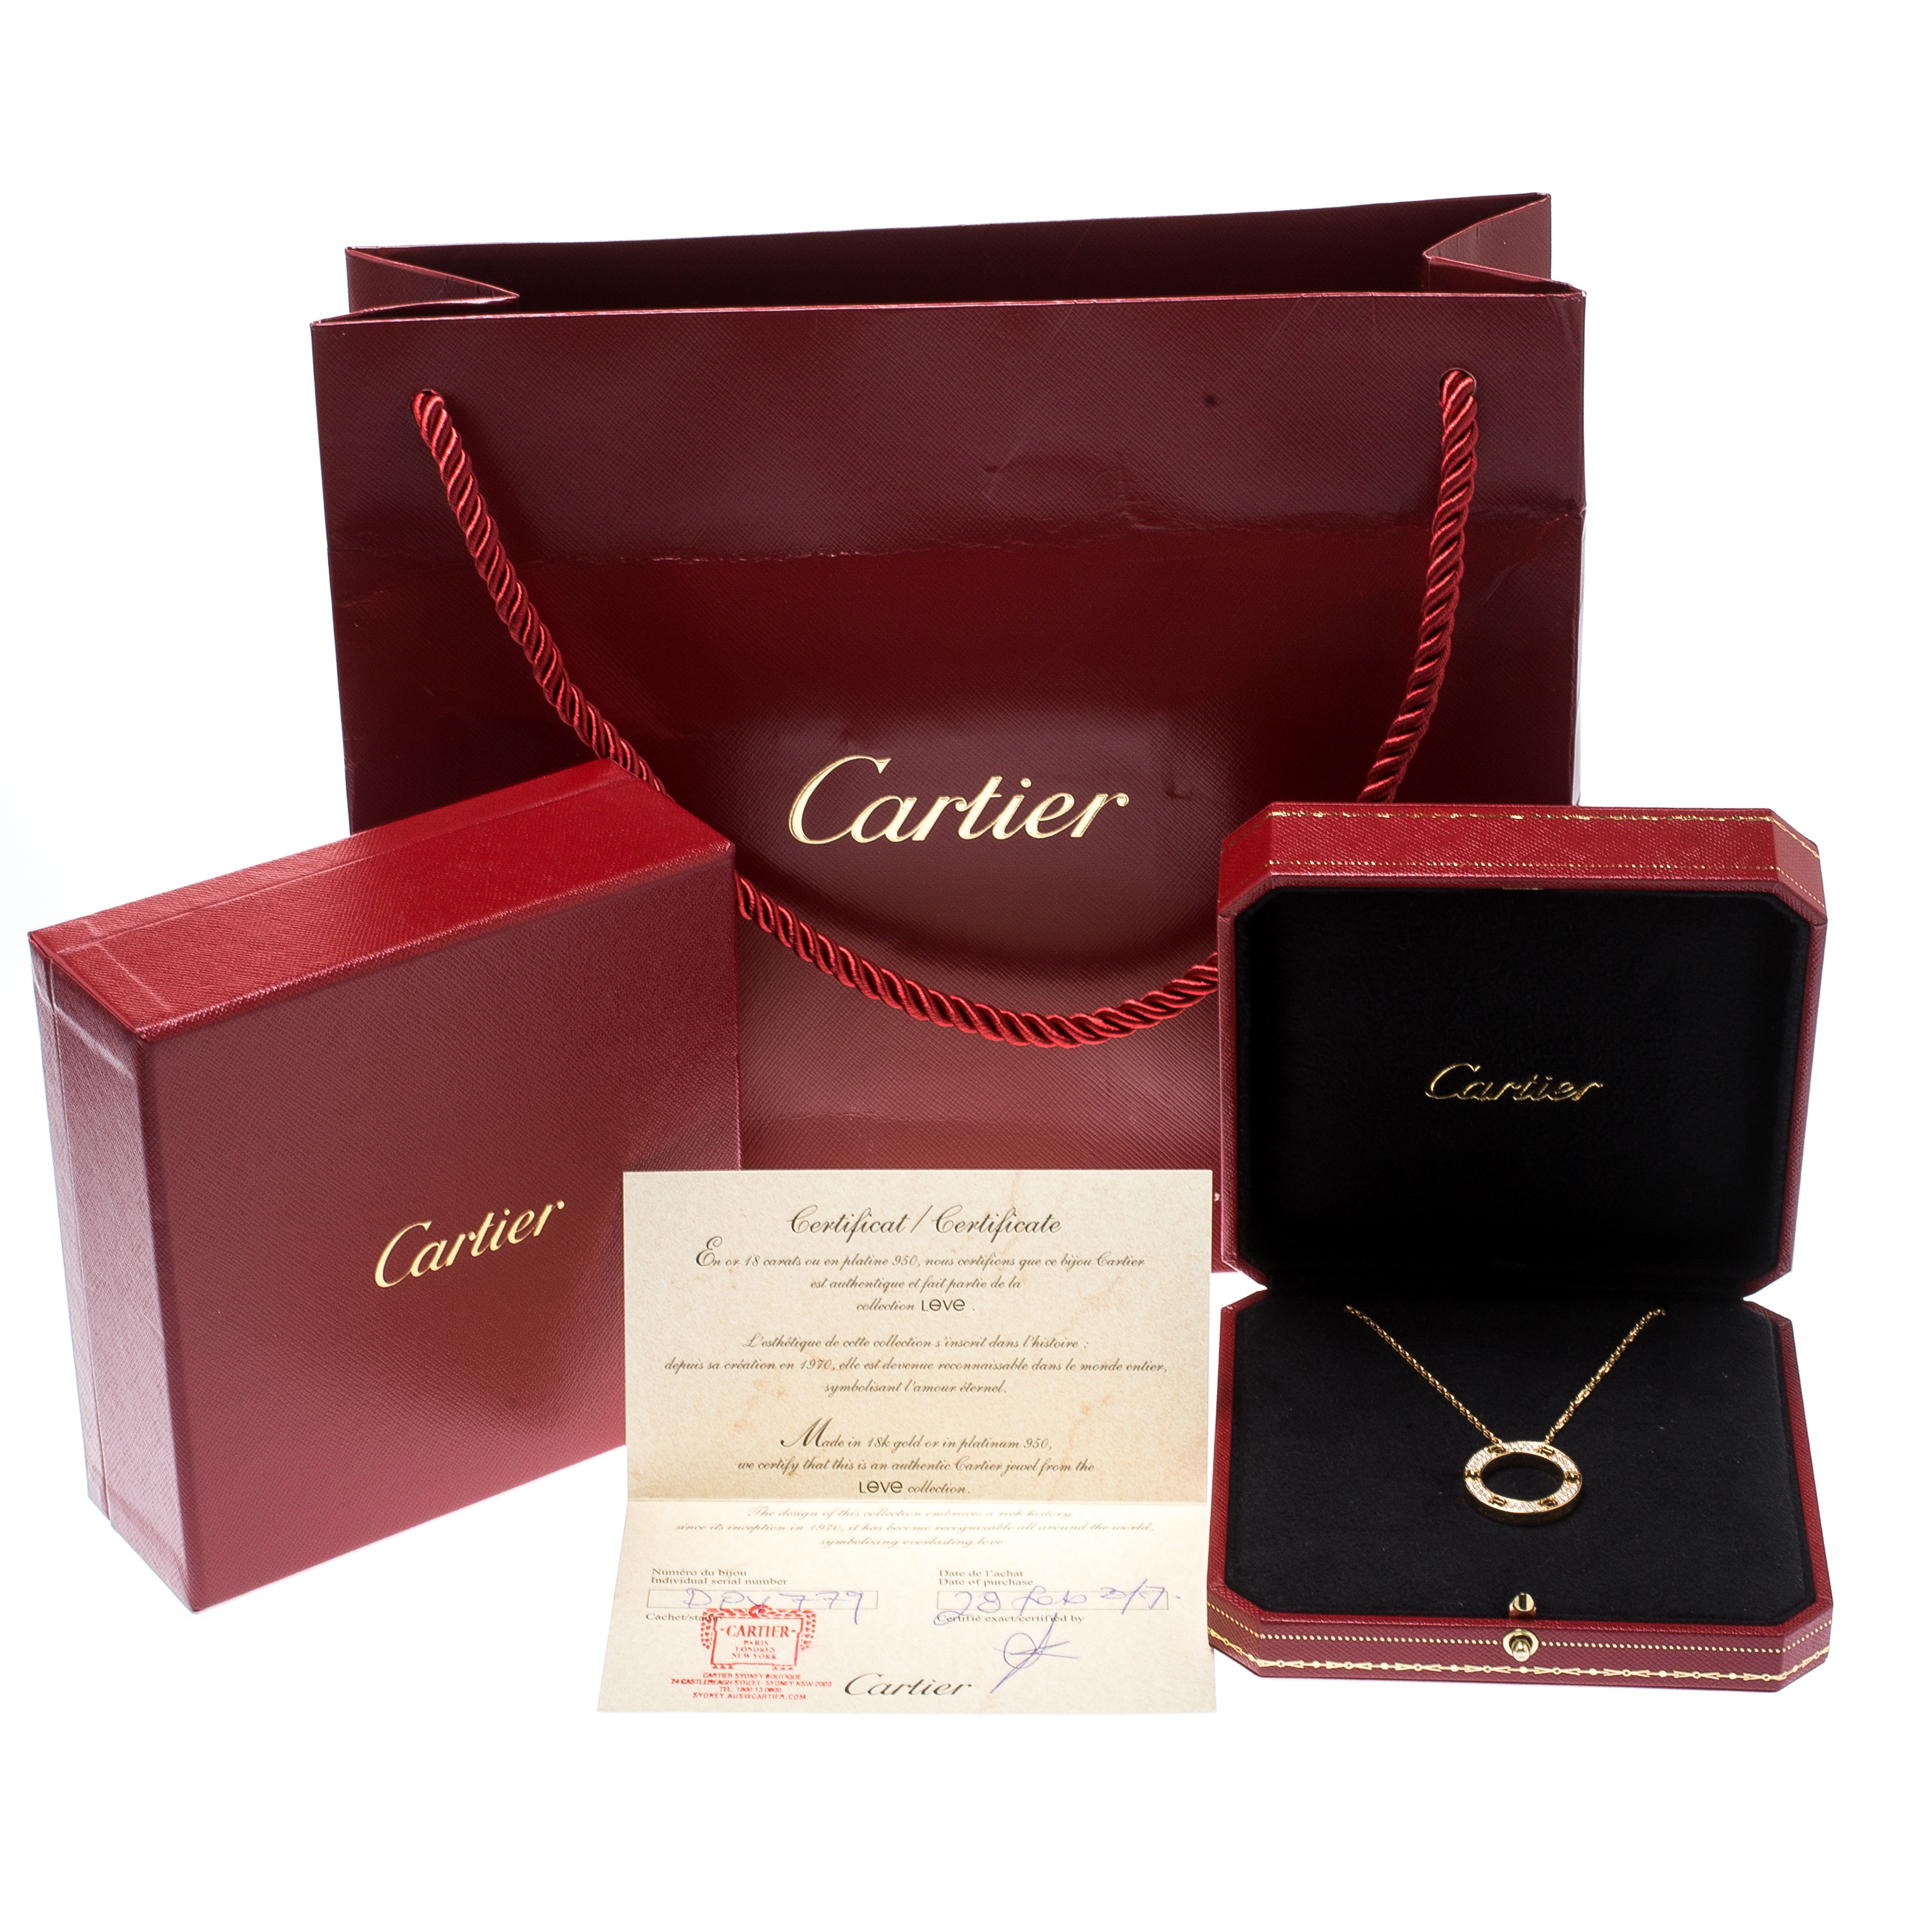 cartier jewelry packaging